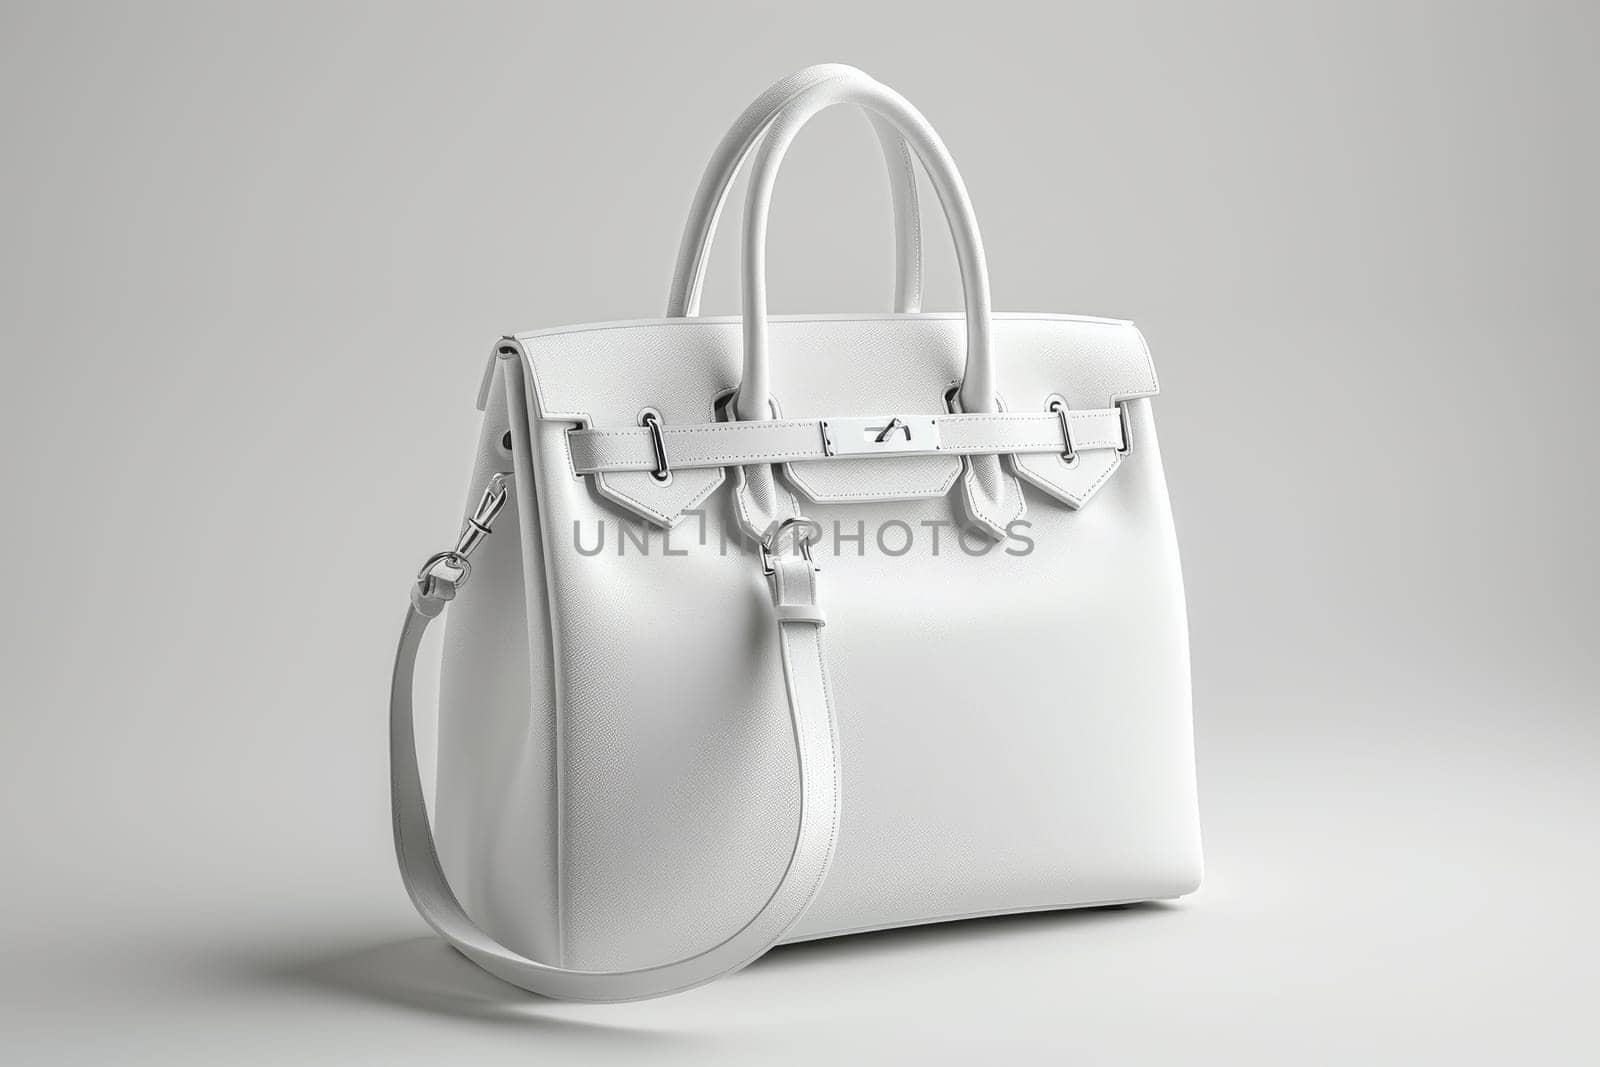 Mockup Luxury Women's handbags made by leather.